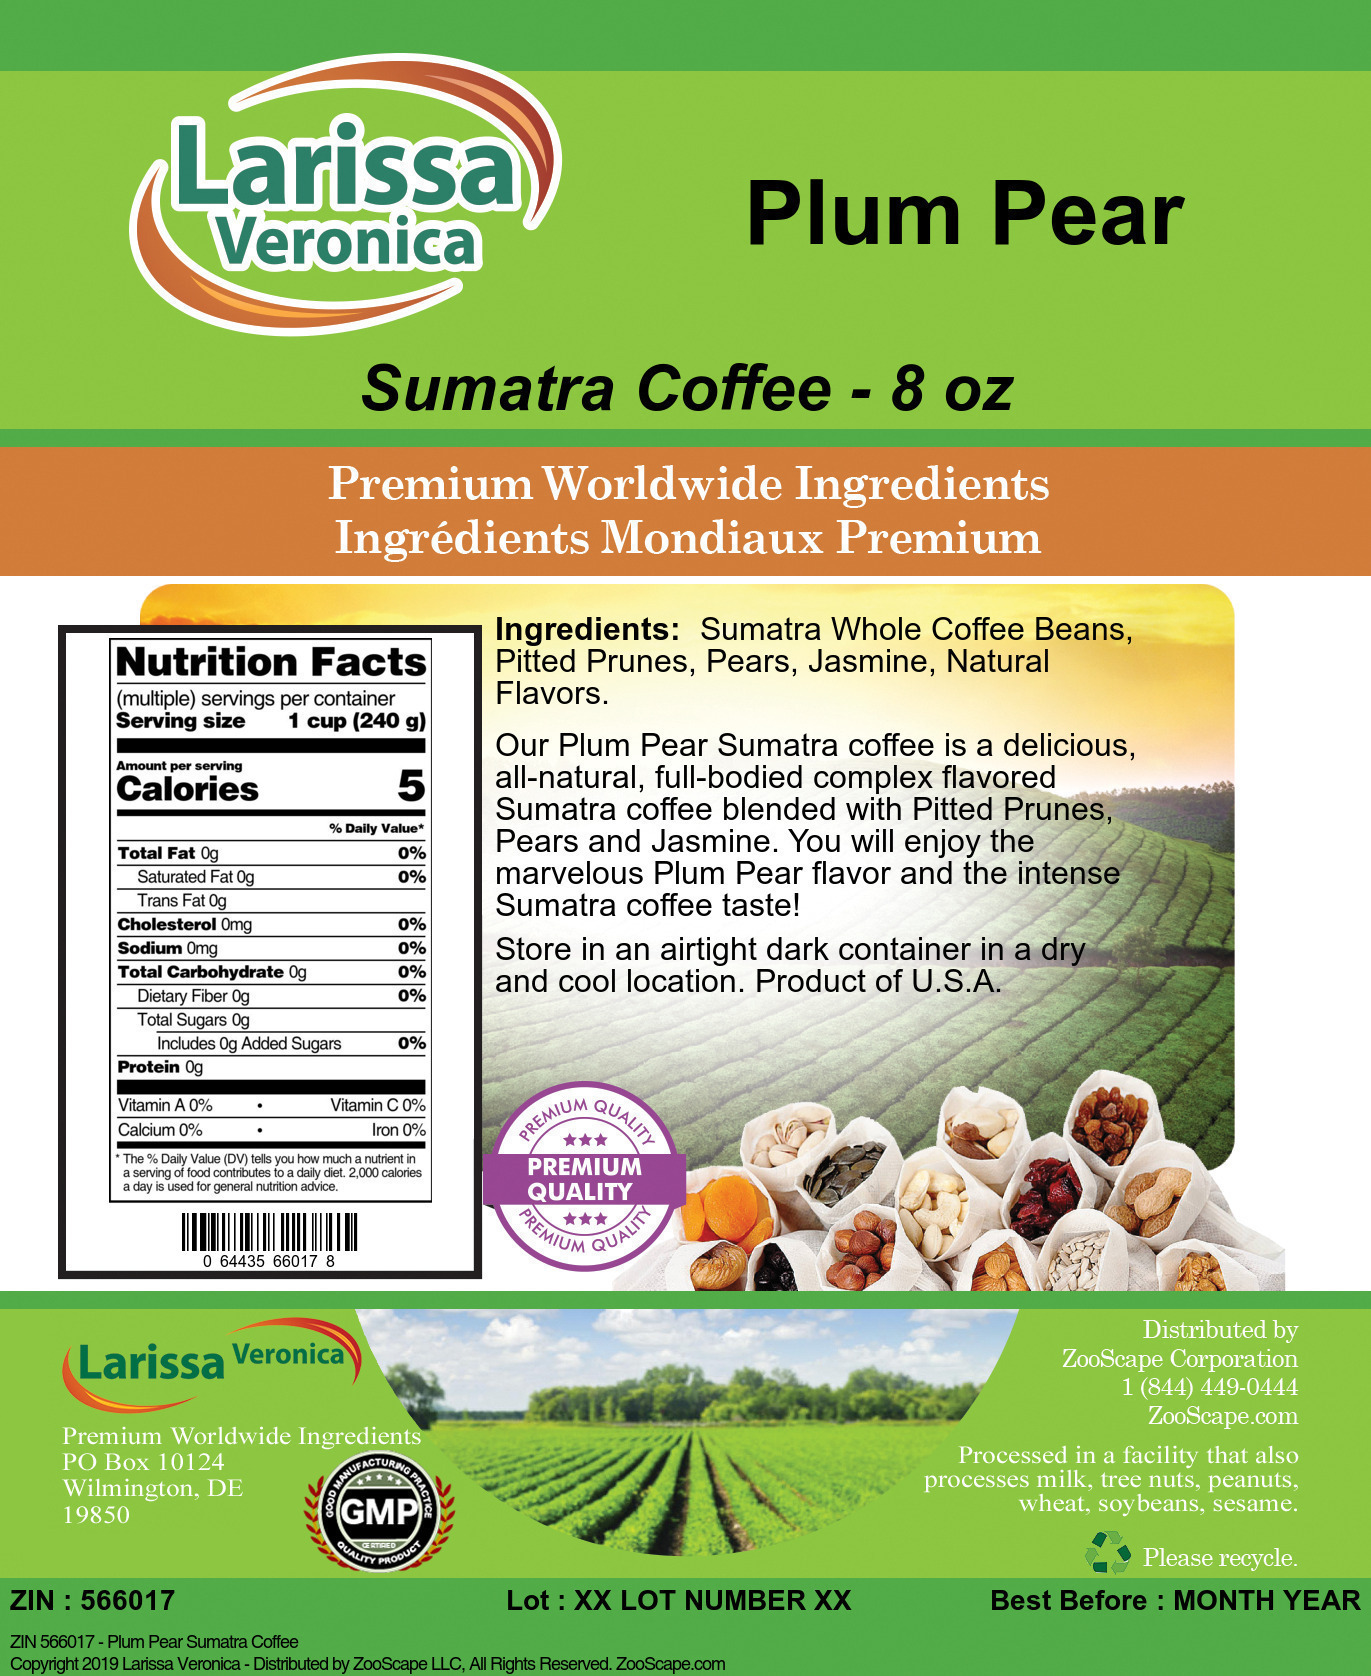 Plum Pear Sumatra Coffee - Label